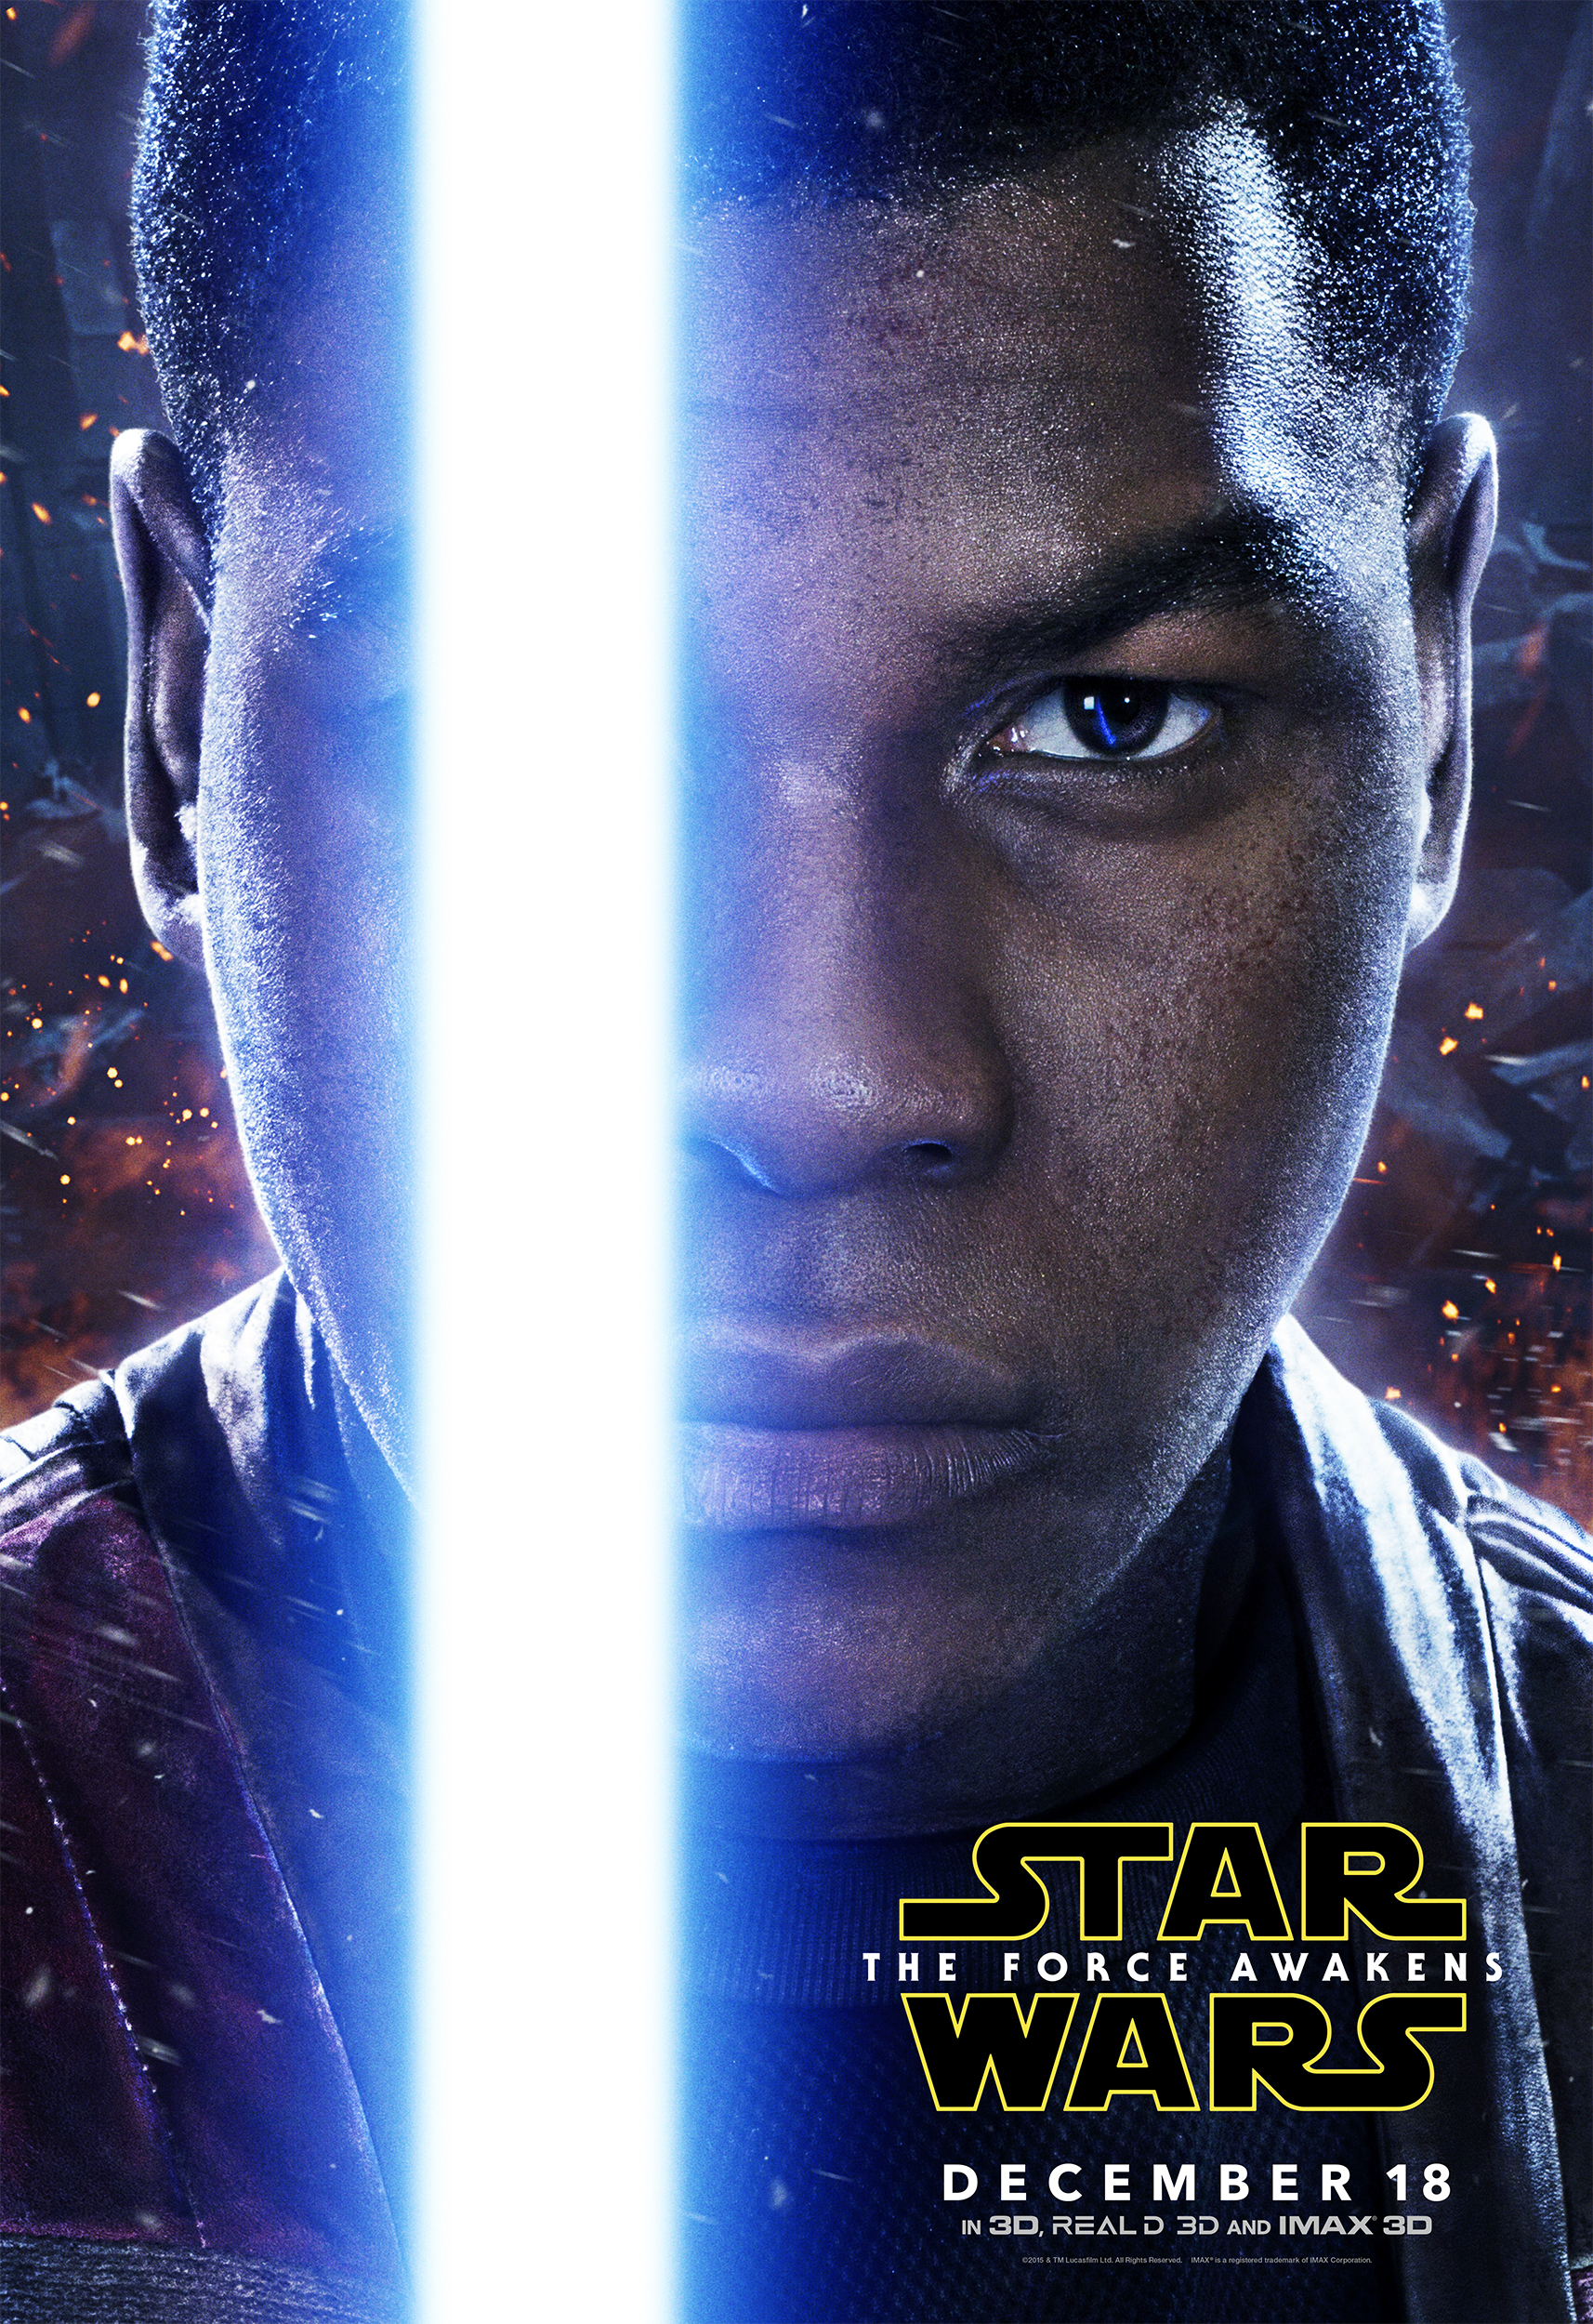 Finn from Star Wars: The Force Awakens